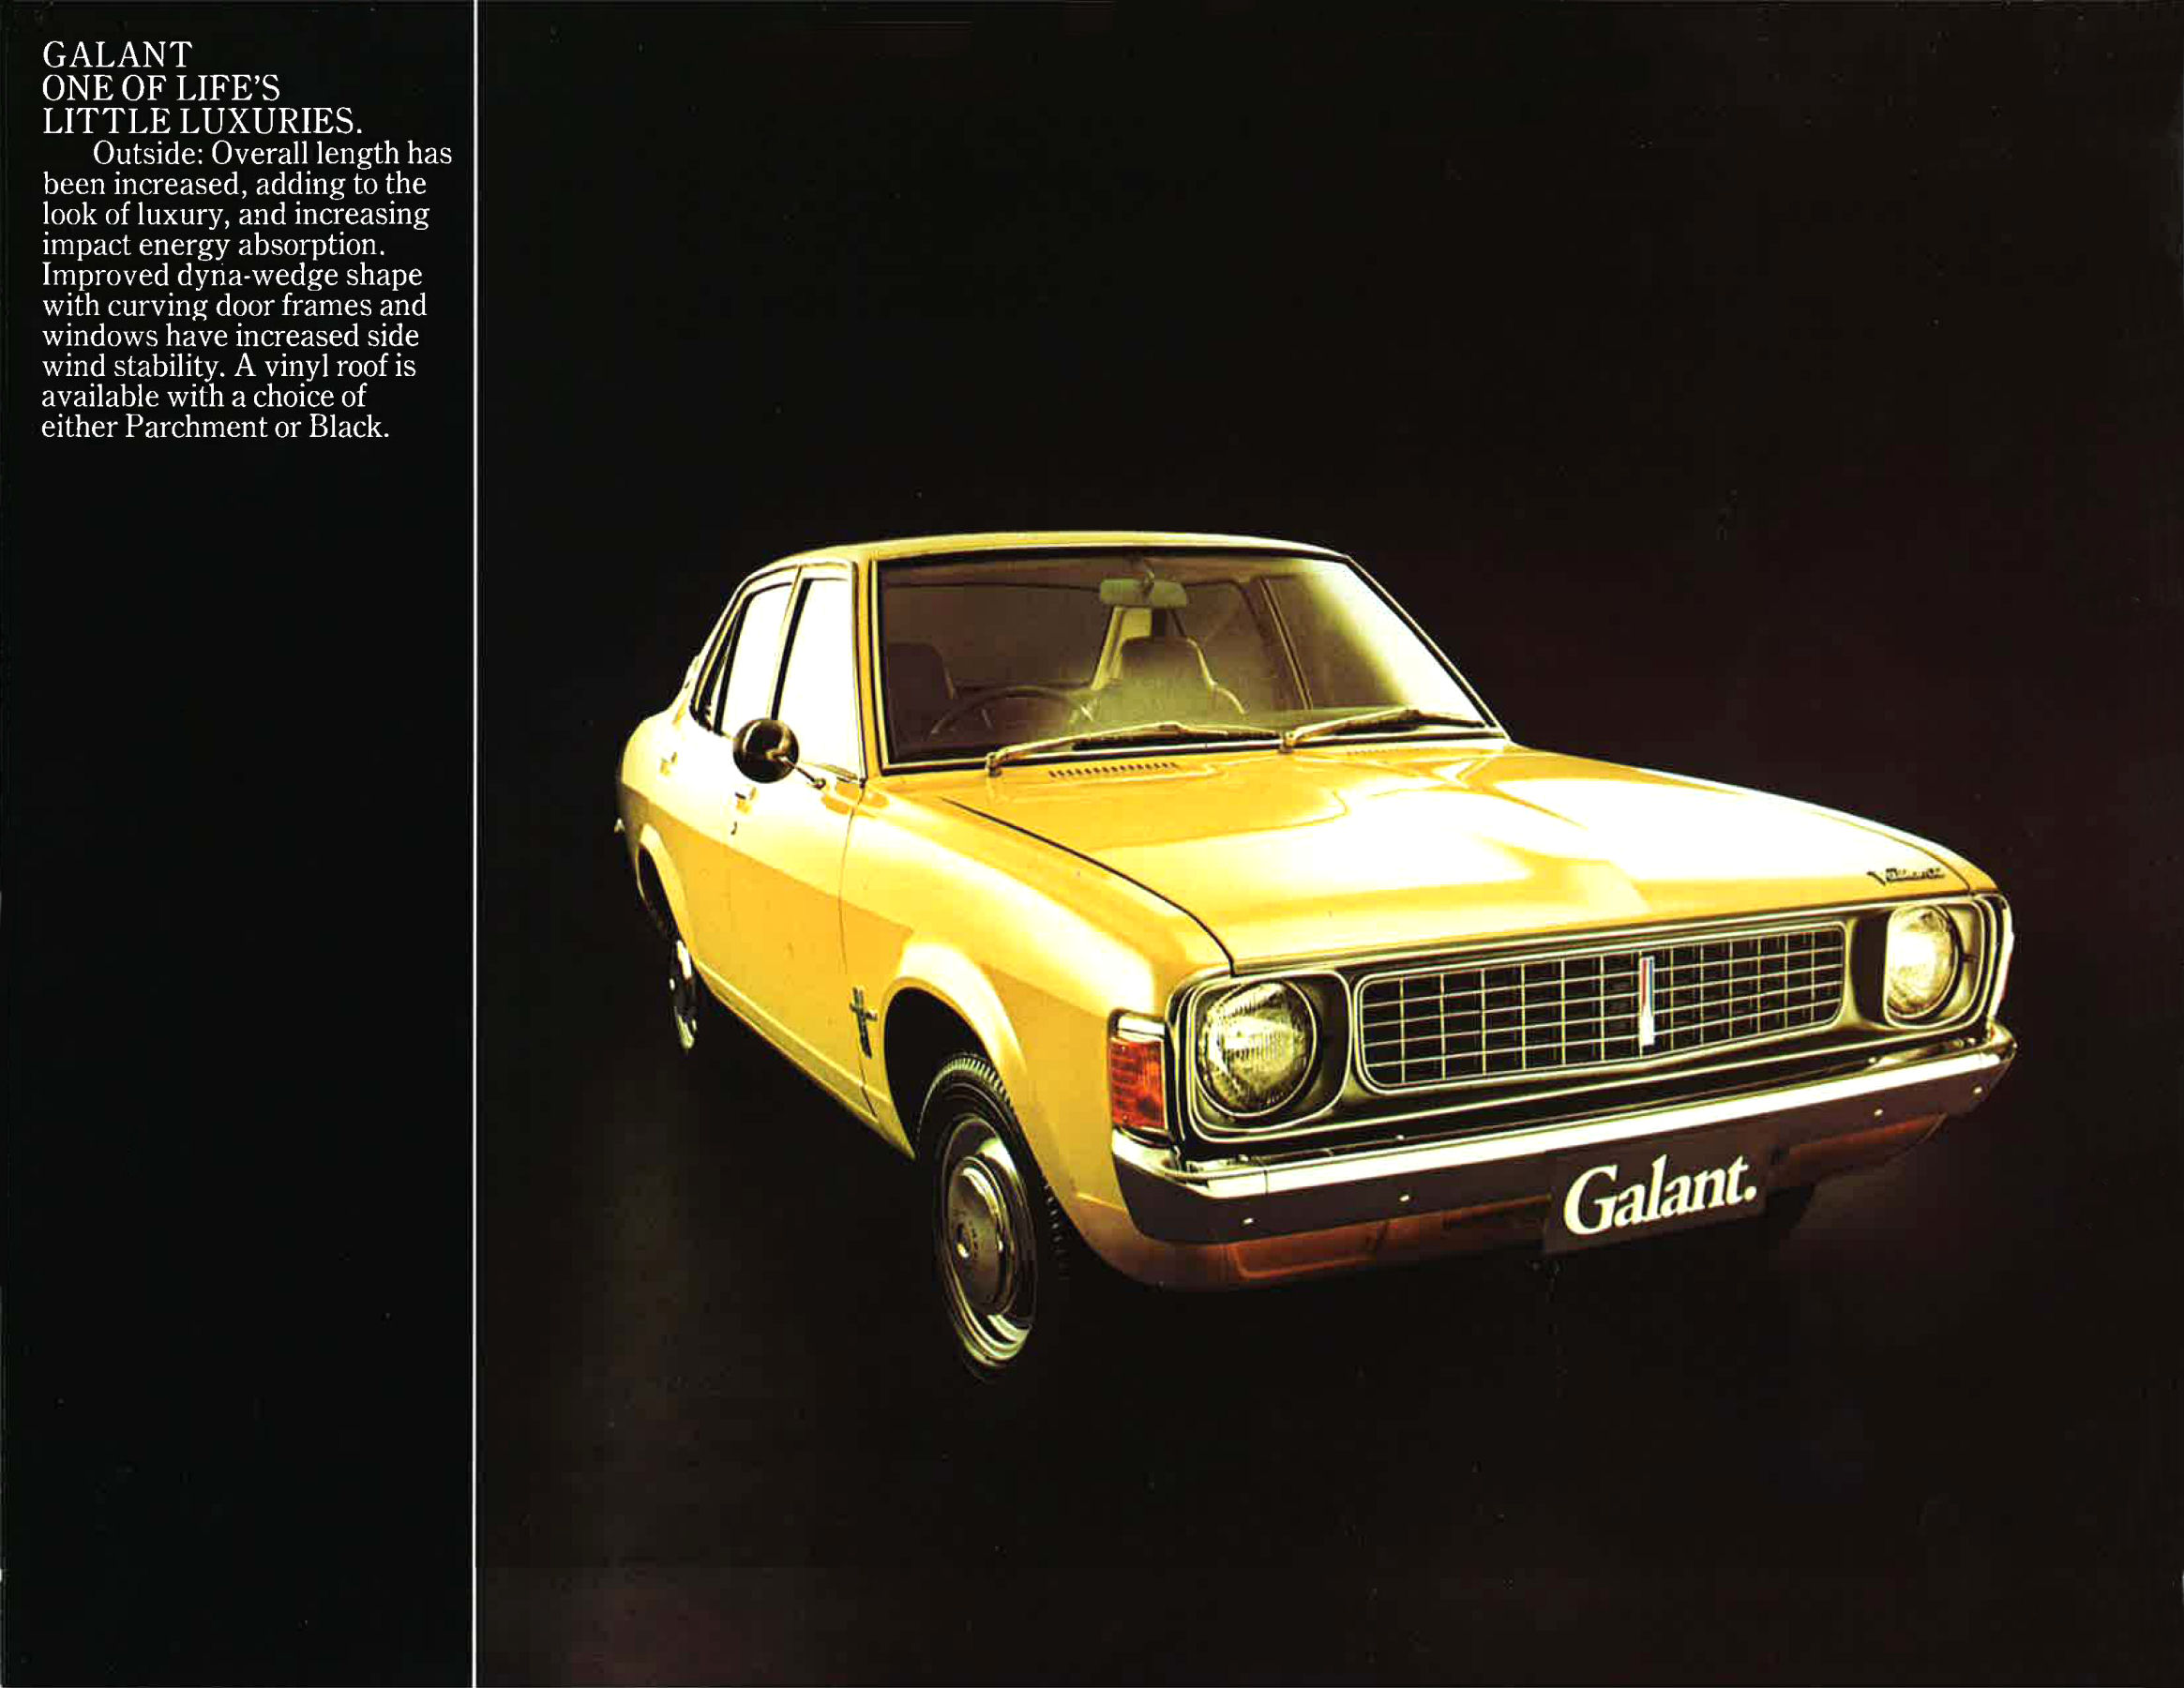 1974 Chrysler GC Valiant Galant Sedan-06